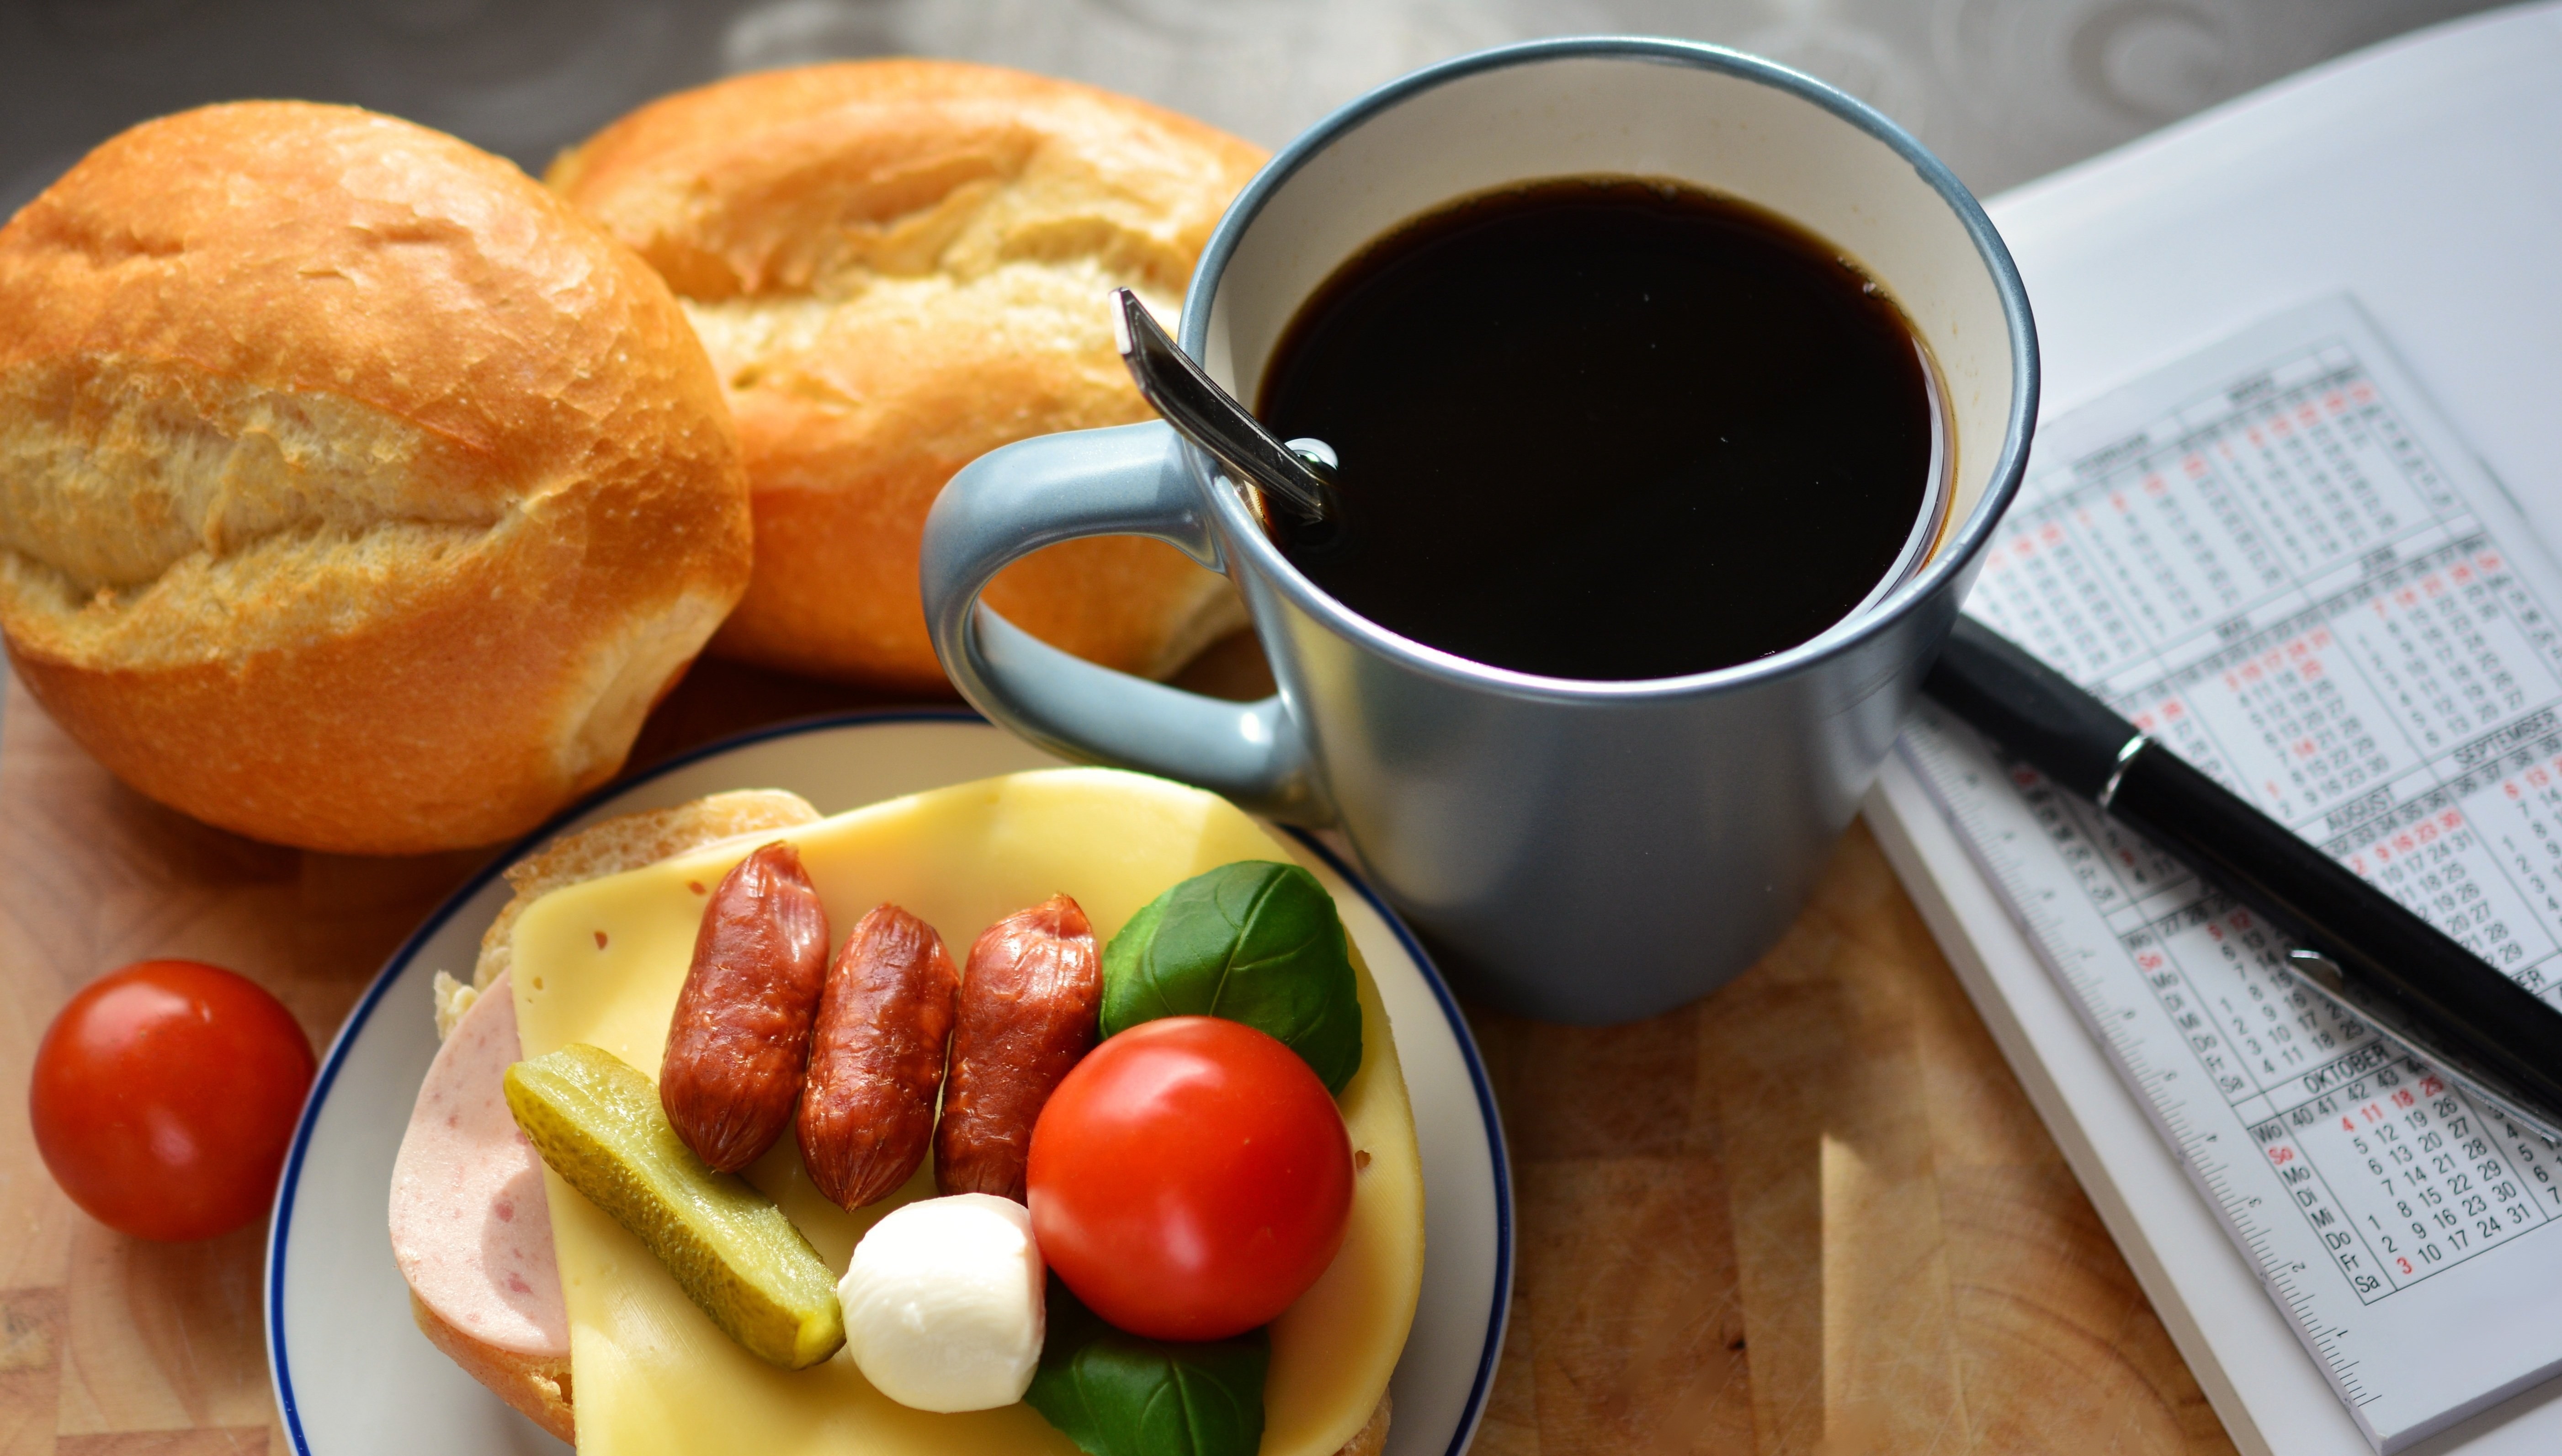 Чай сахар колбаса сыр хлеб. Завтрак с кофе. Чай с бутербродом. Завтрак бутерброды и чай. Завтрак кофе и бутерброд.